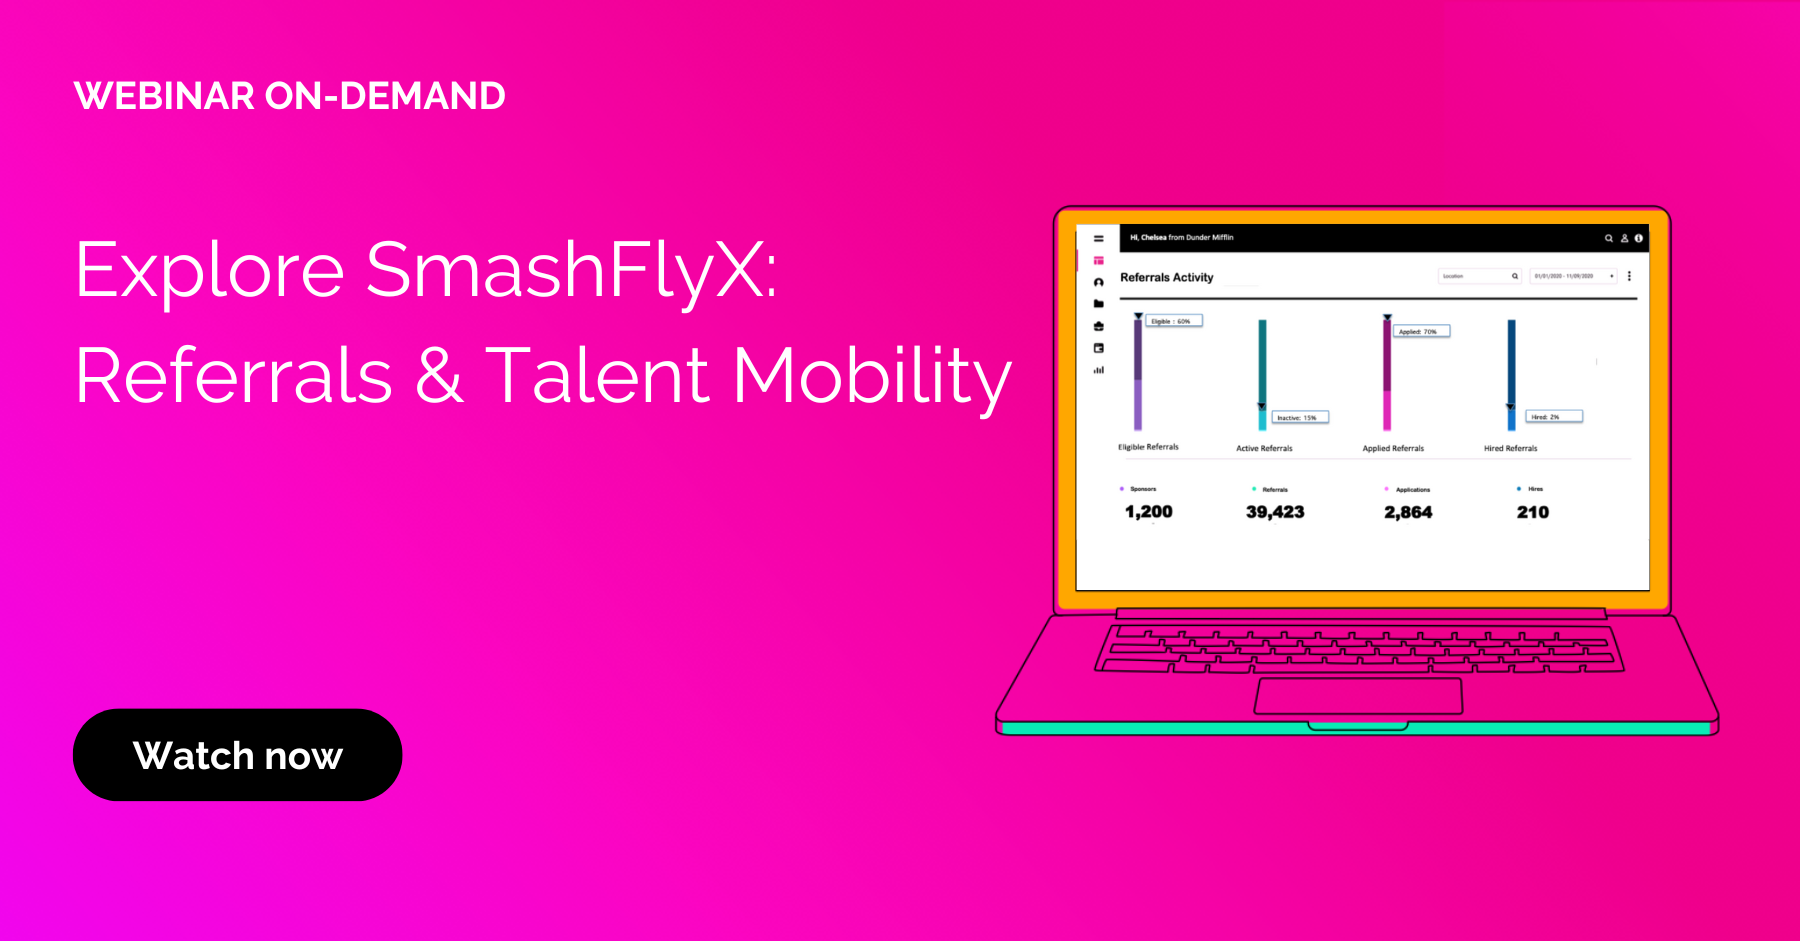 Explore SmashFlyX Referrals & Talent Mobility - OD(1200 × 627 px)